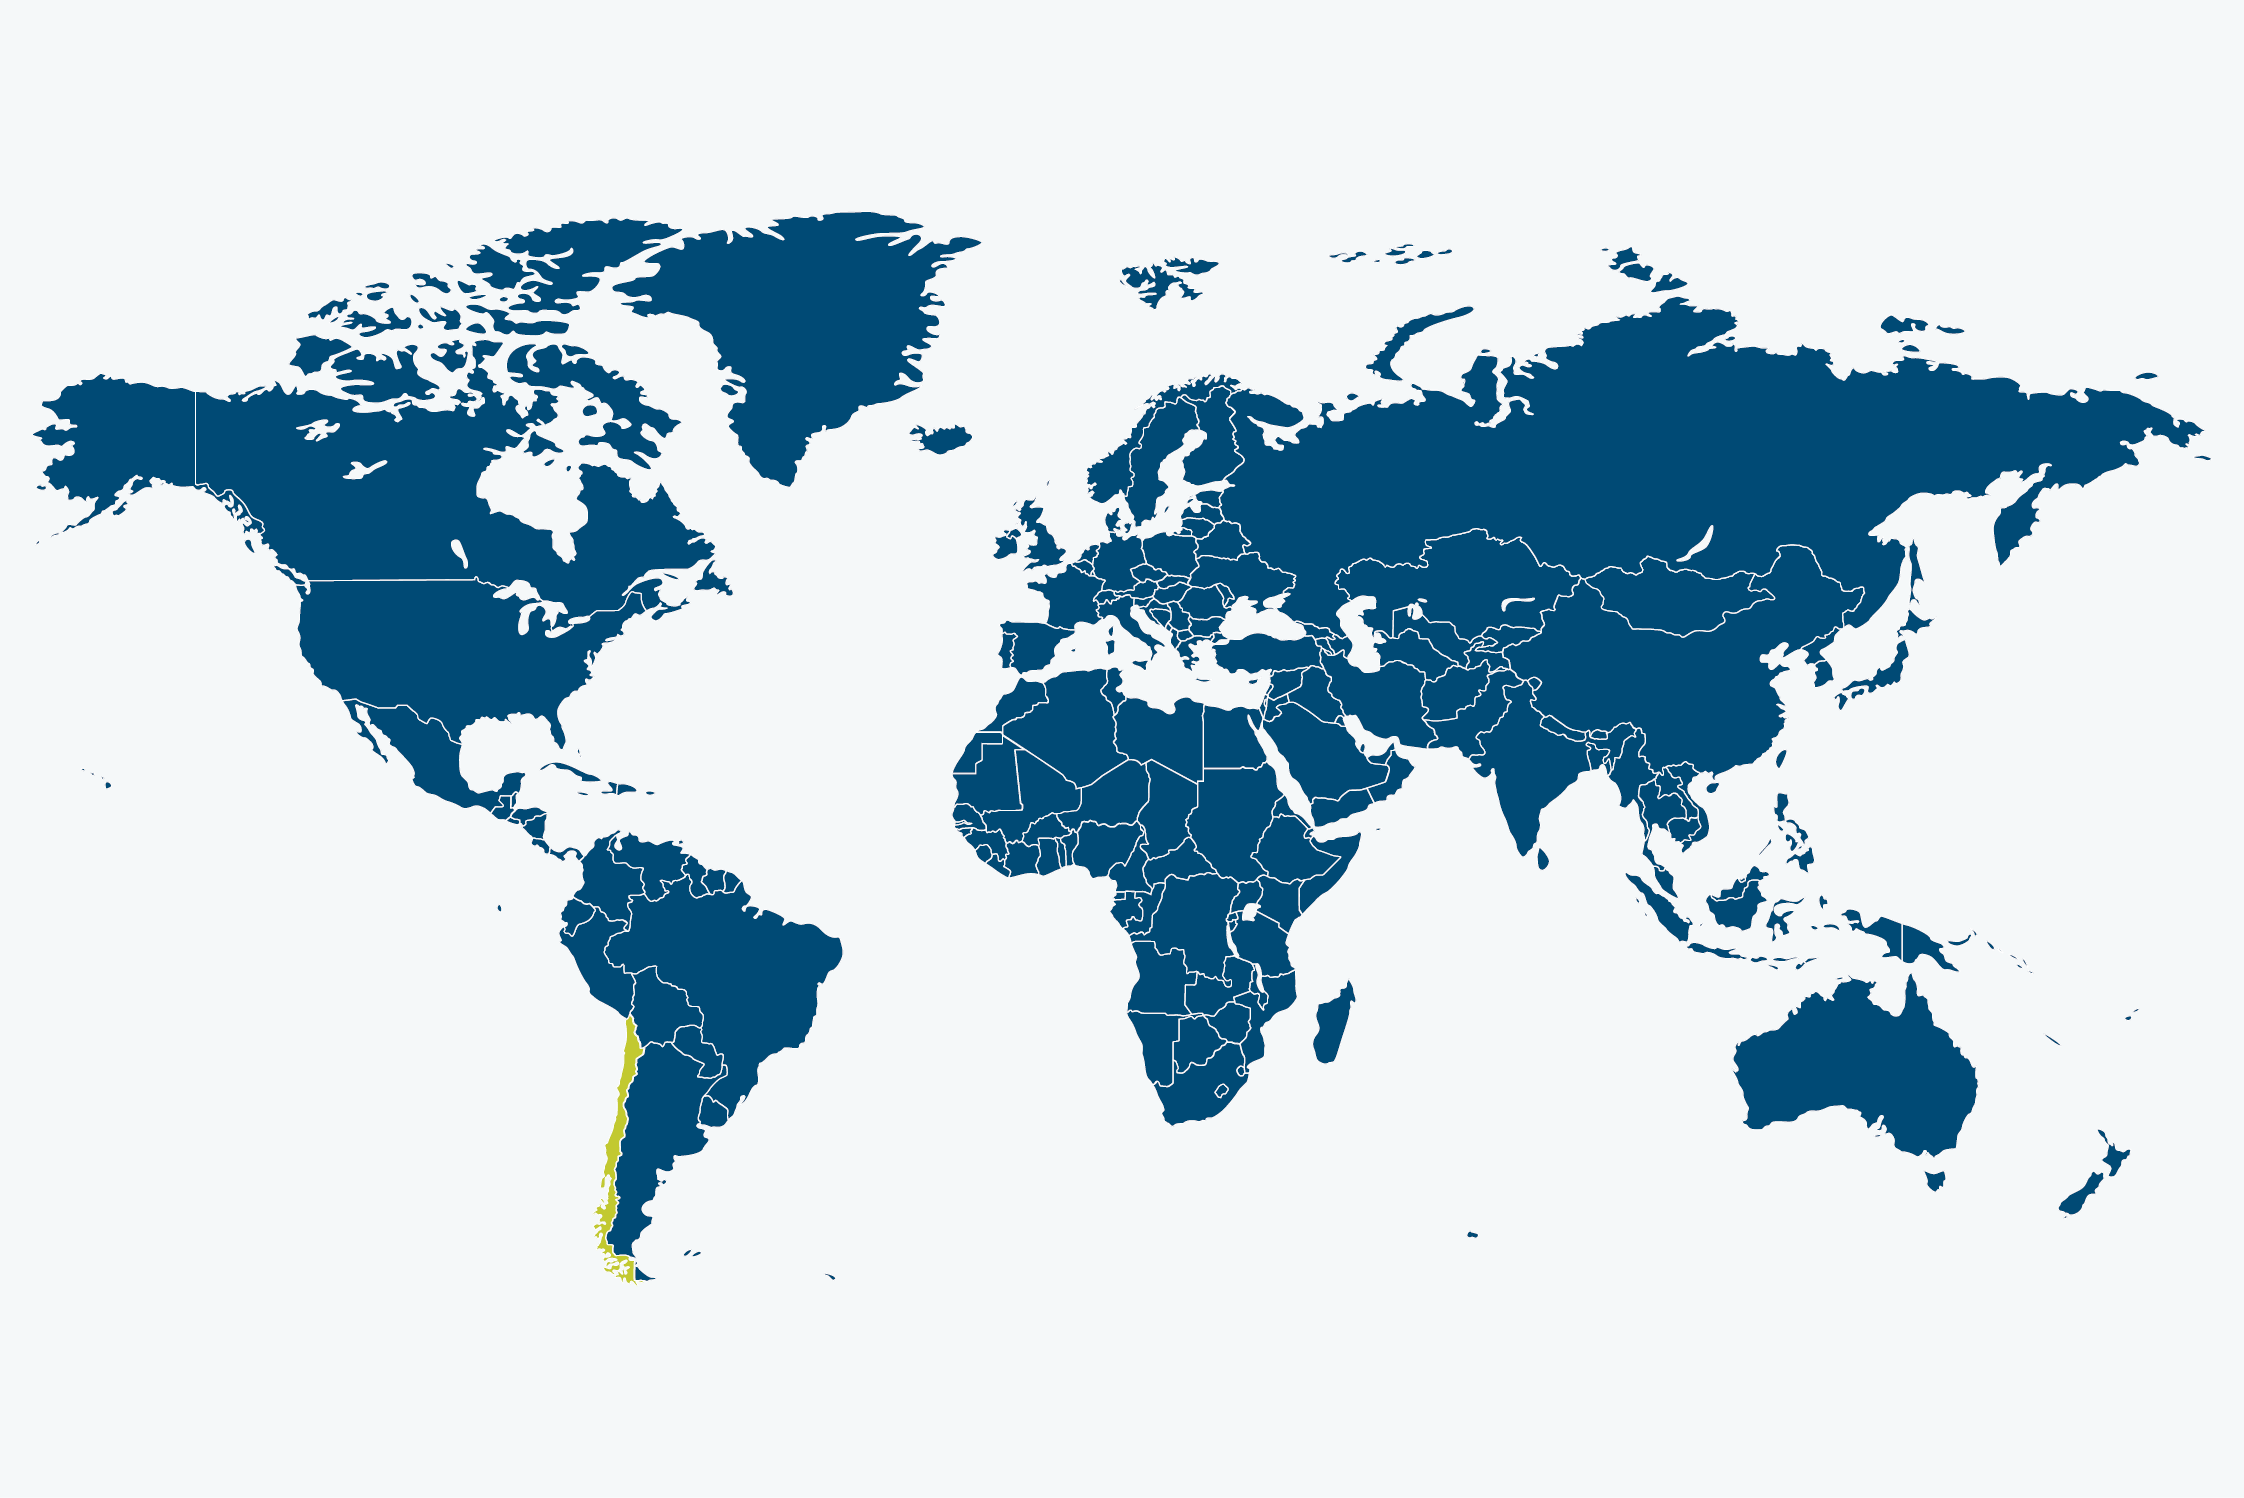 Weltkarte in blau, Chile ist farbig hervorgehoben